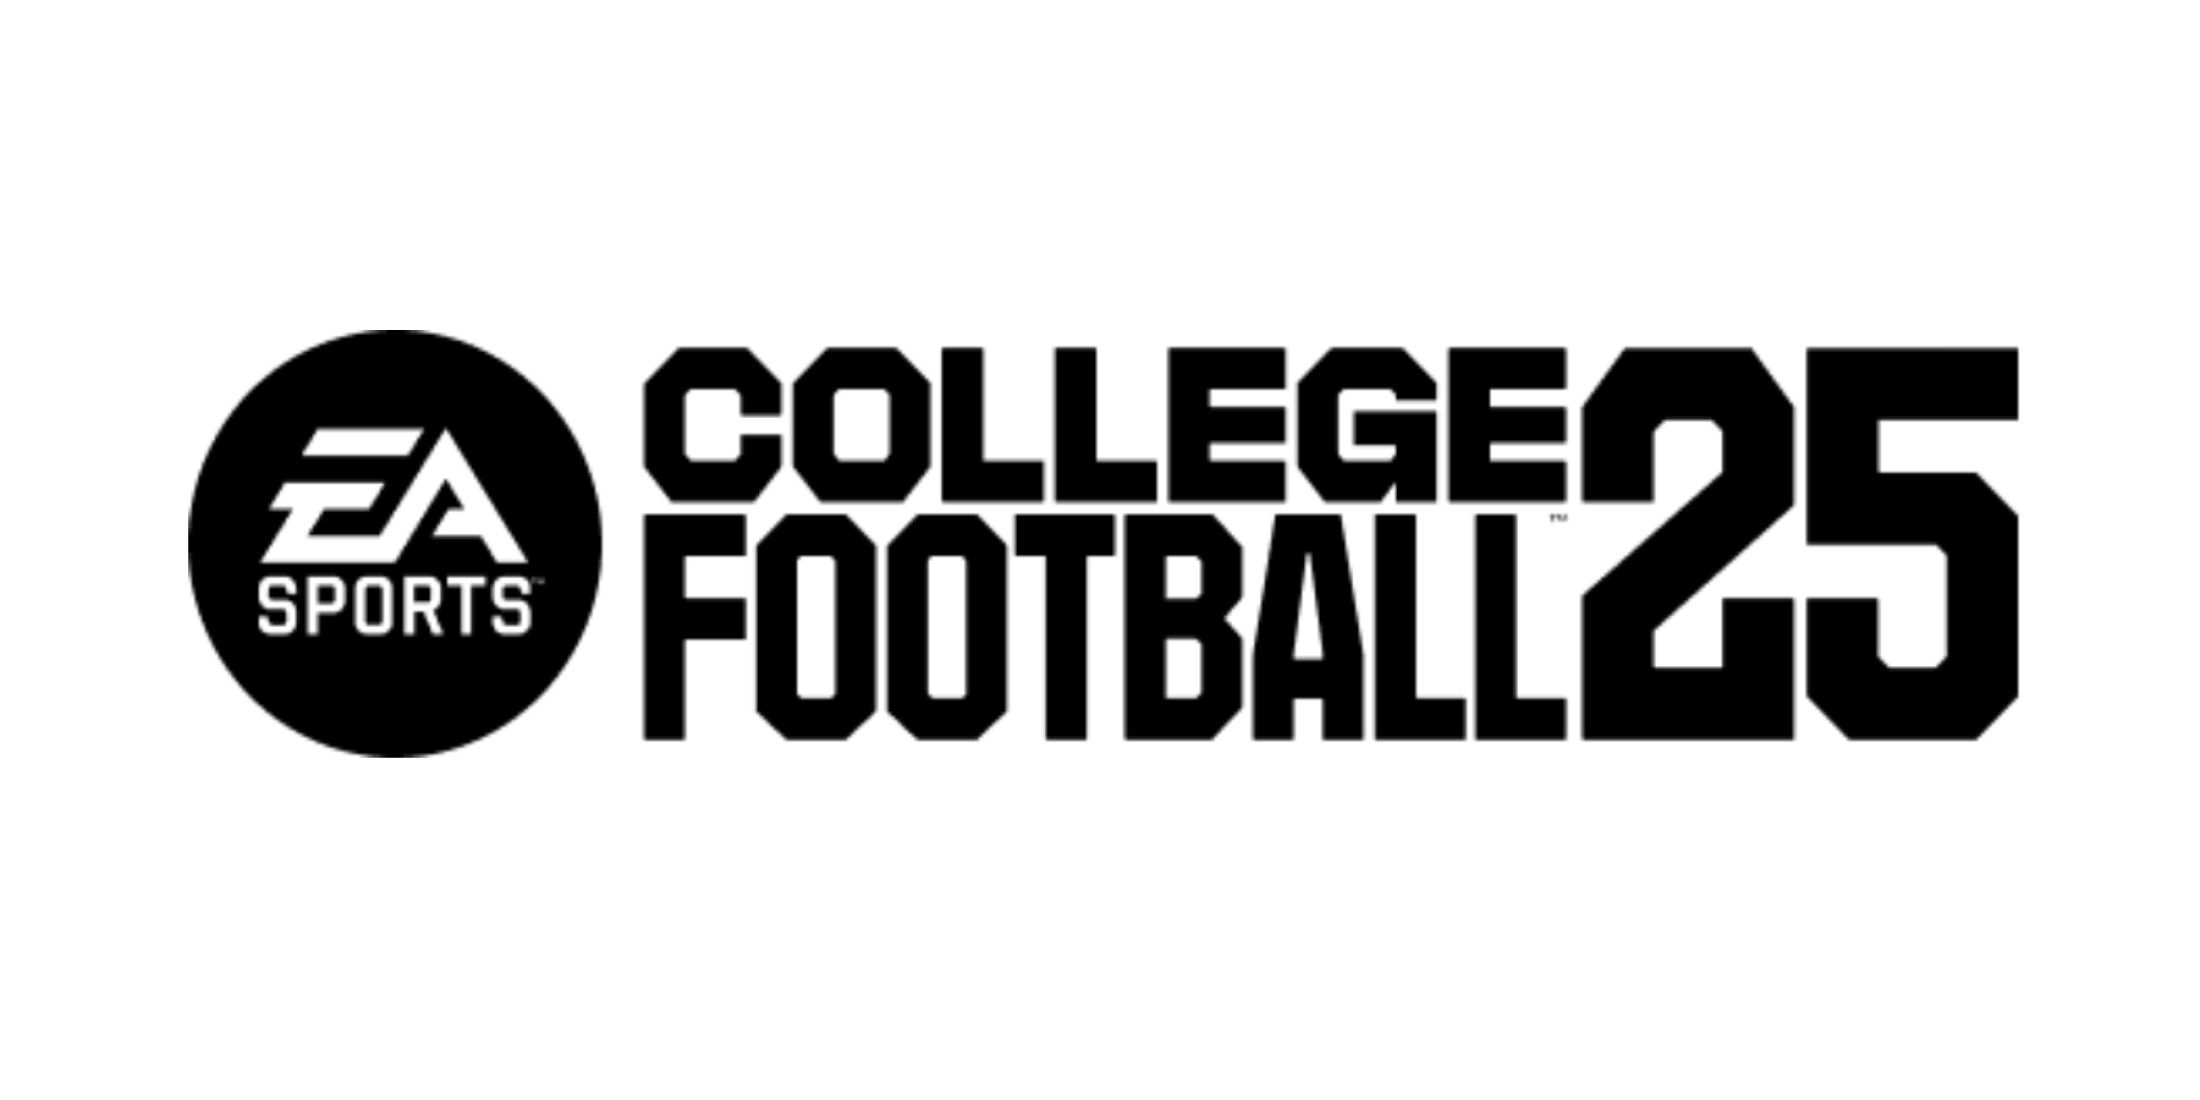 ea-sports-college-football-25-black-letter-logo-white-background-2200x1100